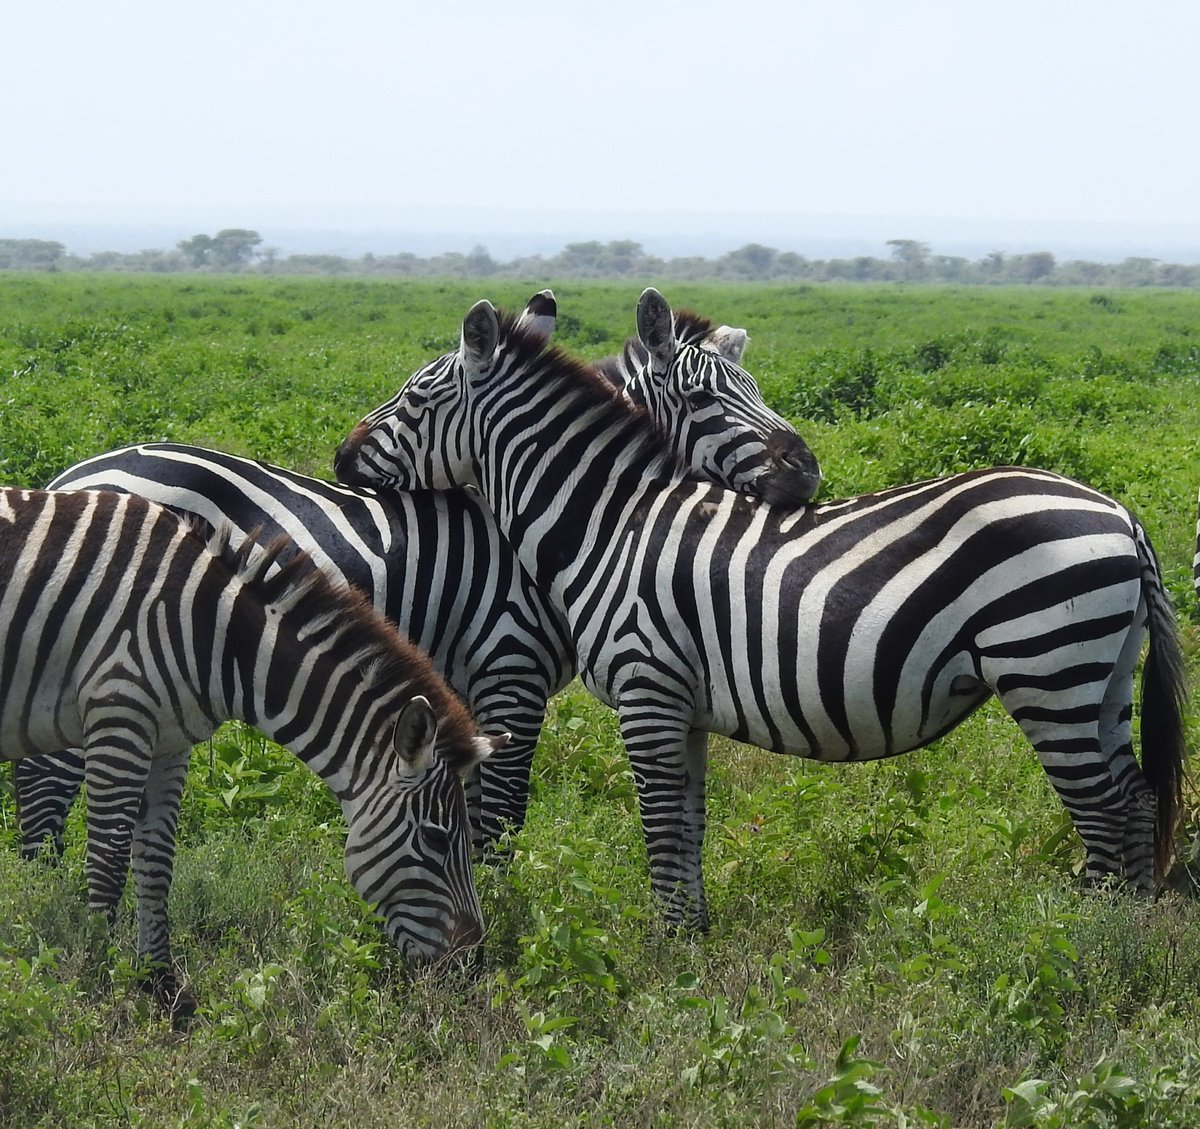 Tanzania is calling for you! Book your Tanzania safari tours with @JelaniTours  for unforgettable authentic experience! #tanzaniasafaris #safarisintanzania #safaritanzanie #africansafari #africansafaritours #africasafari #safari #safaris #safaritanzania #tanzania